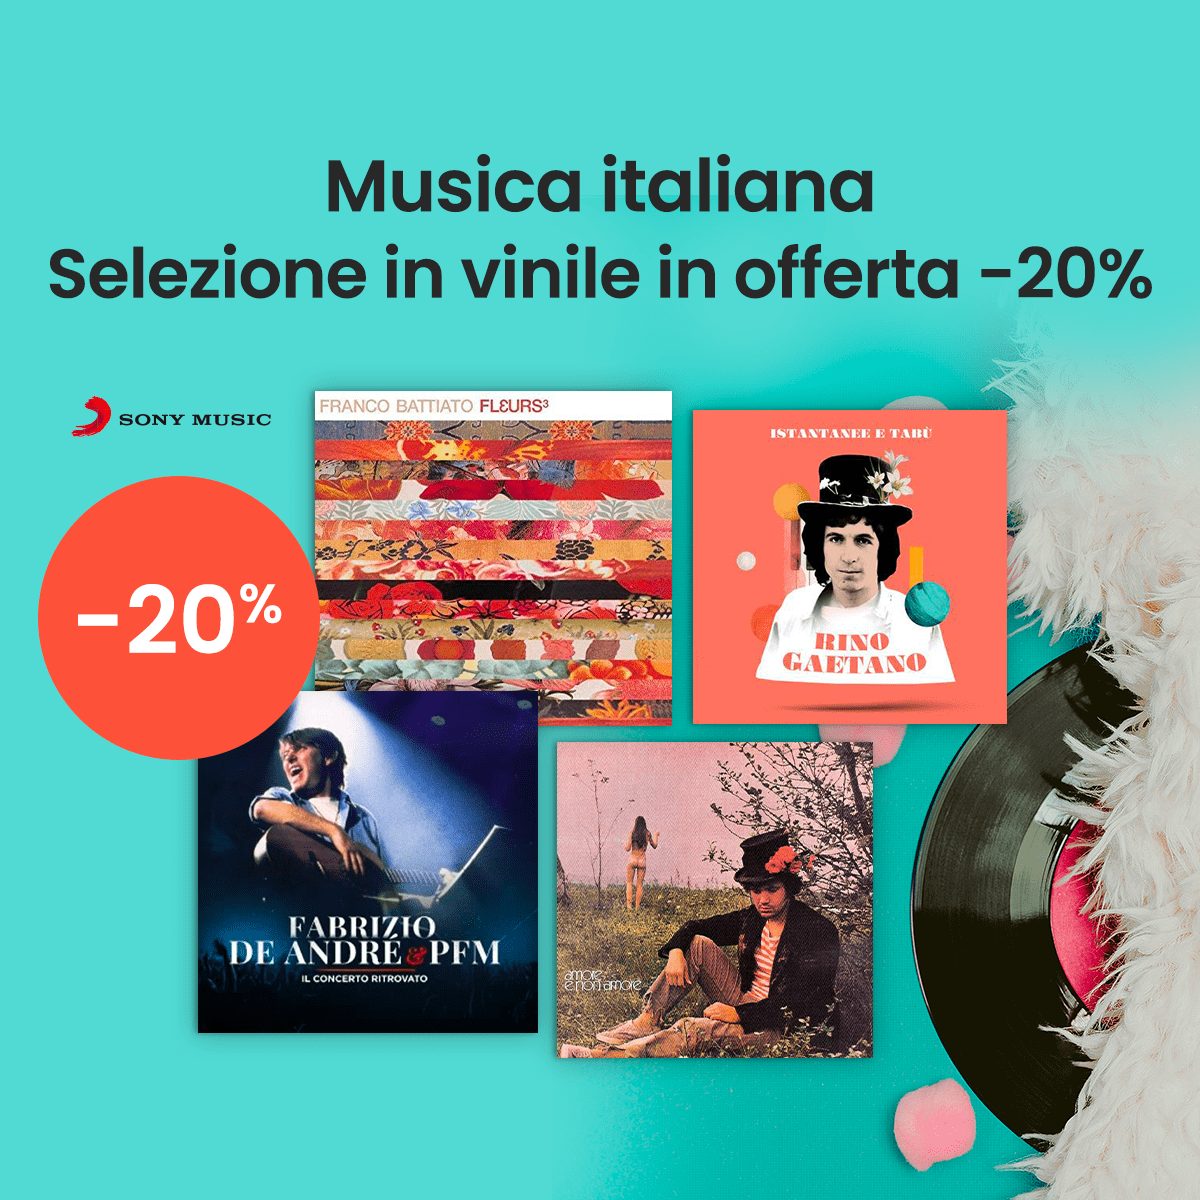 Musica italiana in vinile -20%